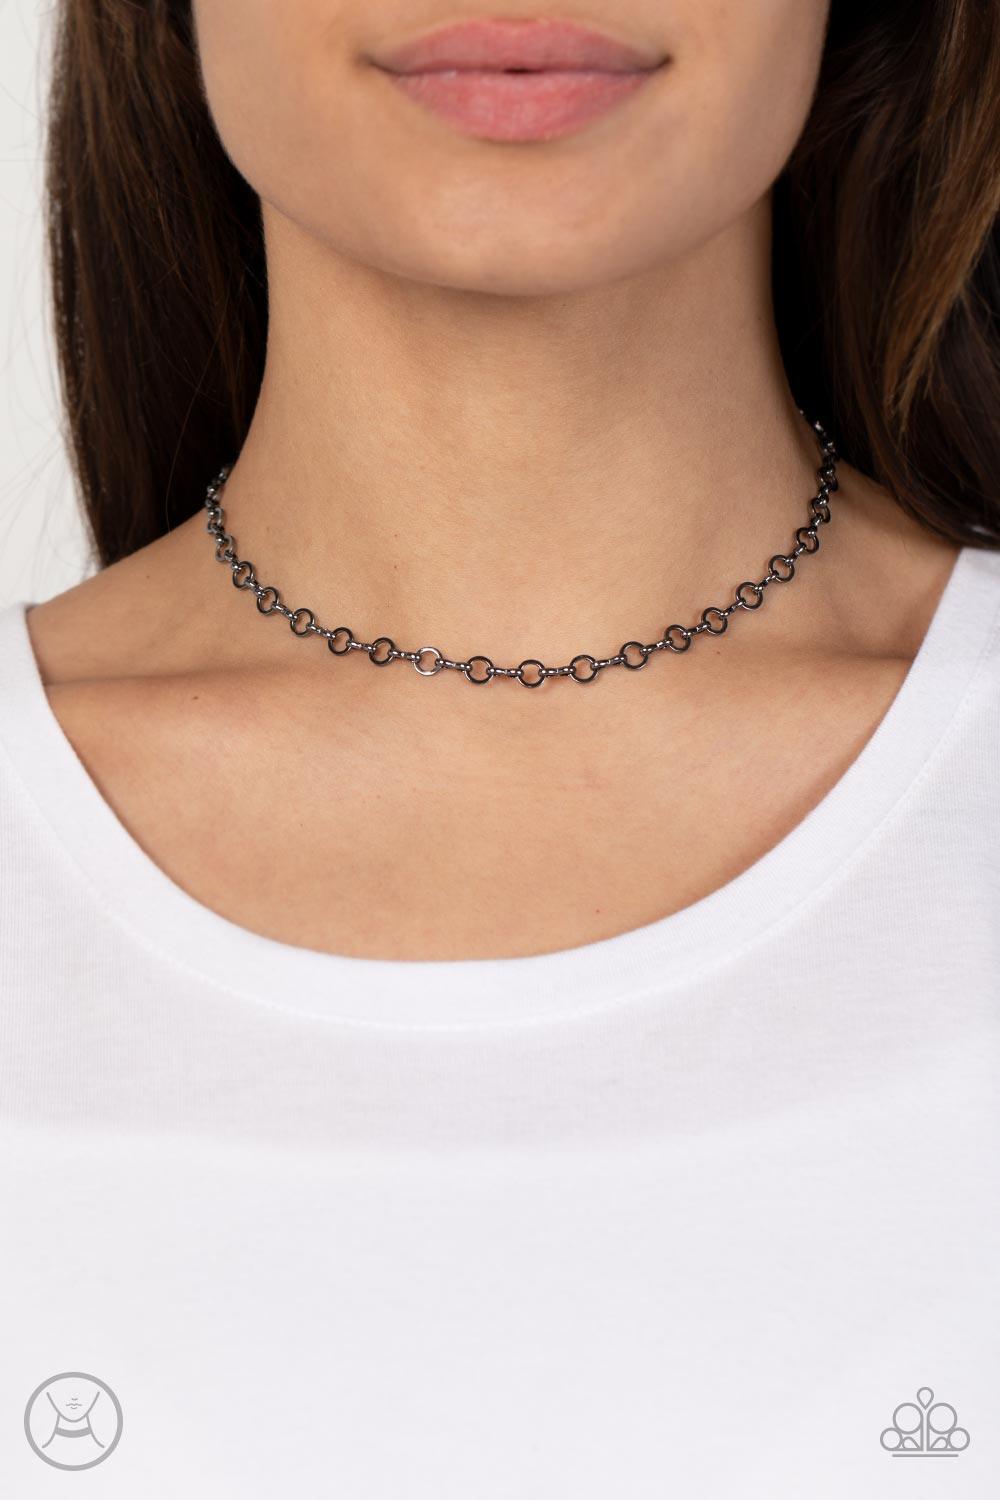 Keepin It Chic Black Necklace - Jewelry by Bretta